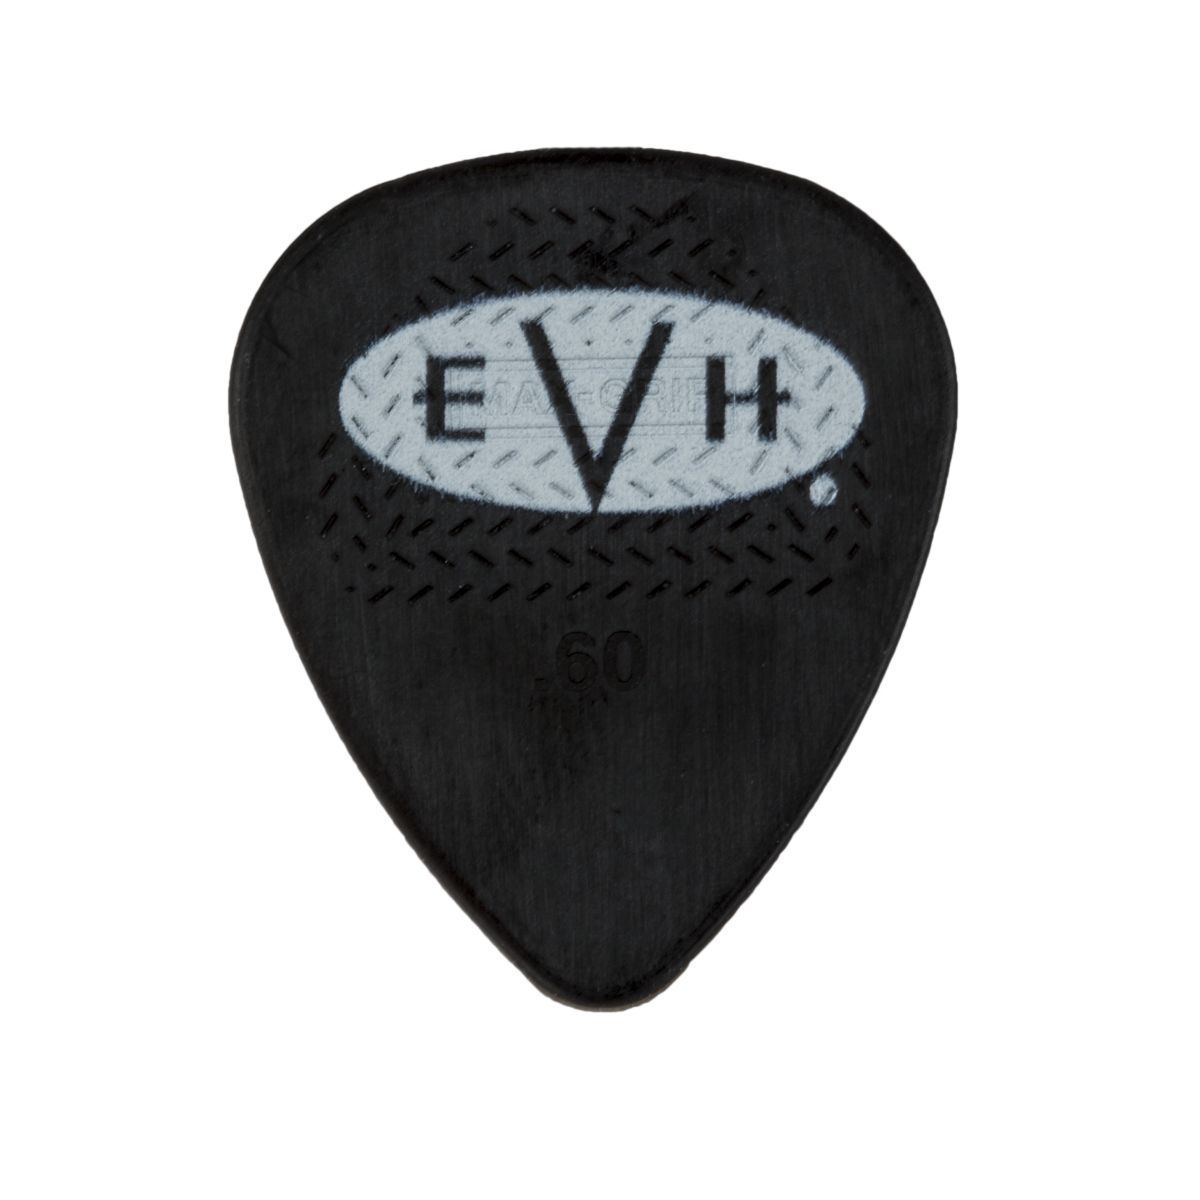 EVH Signature Picks Black-White .60 mm 6 Count